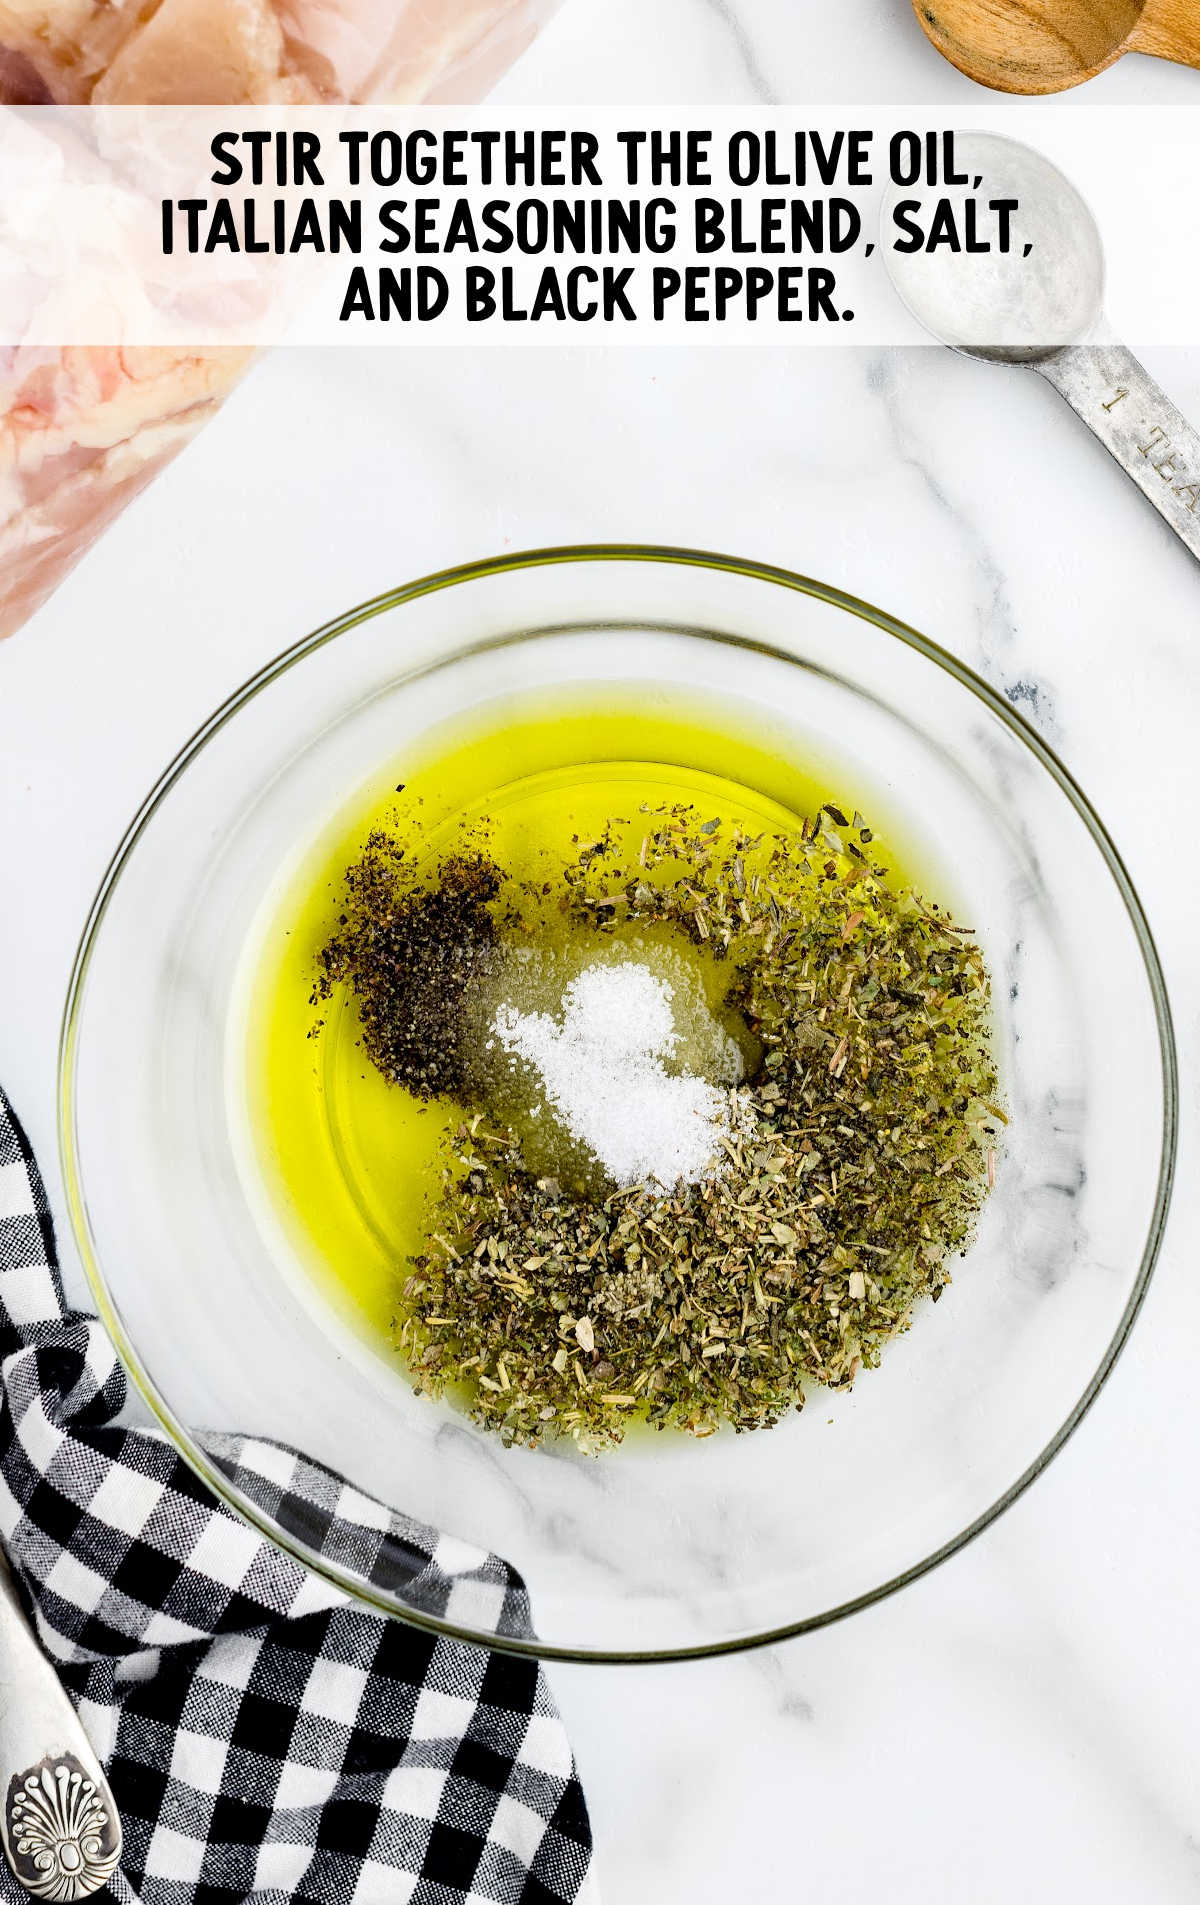 olive oil, Italian seasoning blend, salt, and black pepper stirred in a bowl